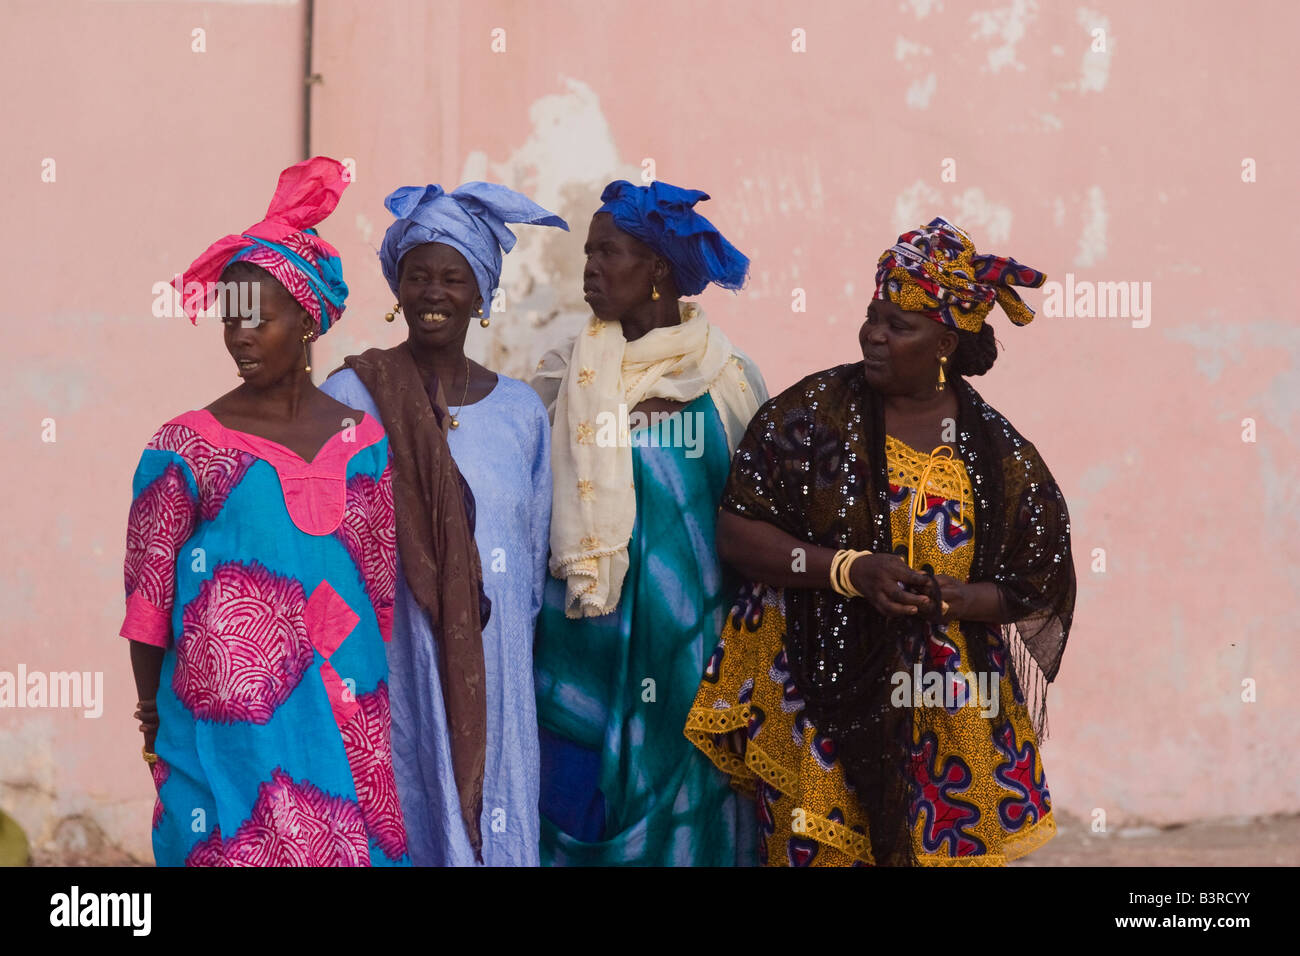 African Costumes Immagini E Fotos Stock Alamy